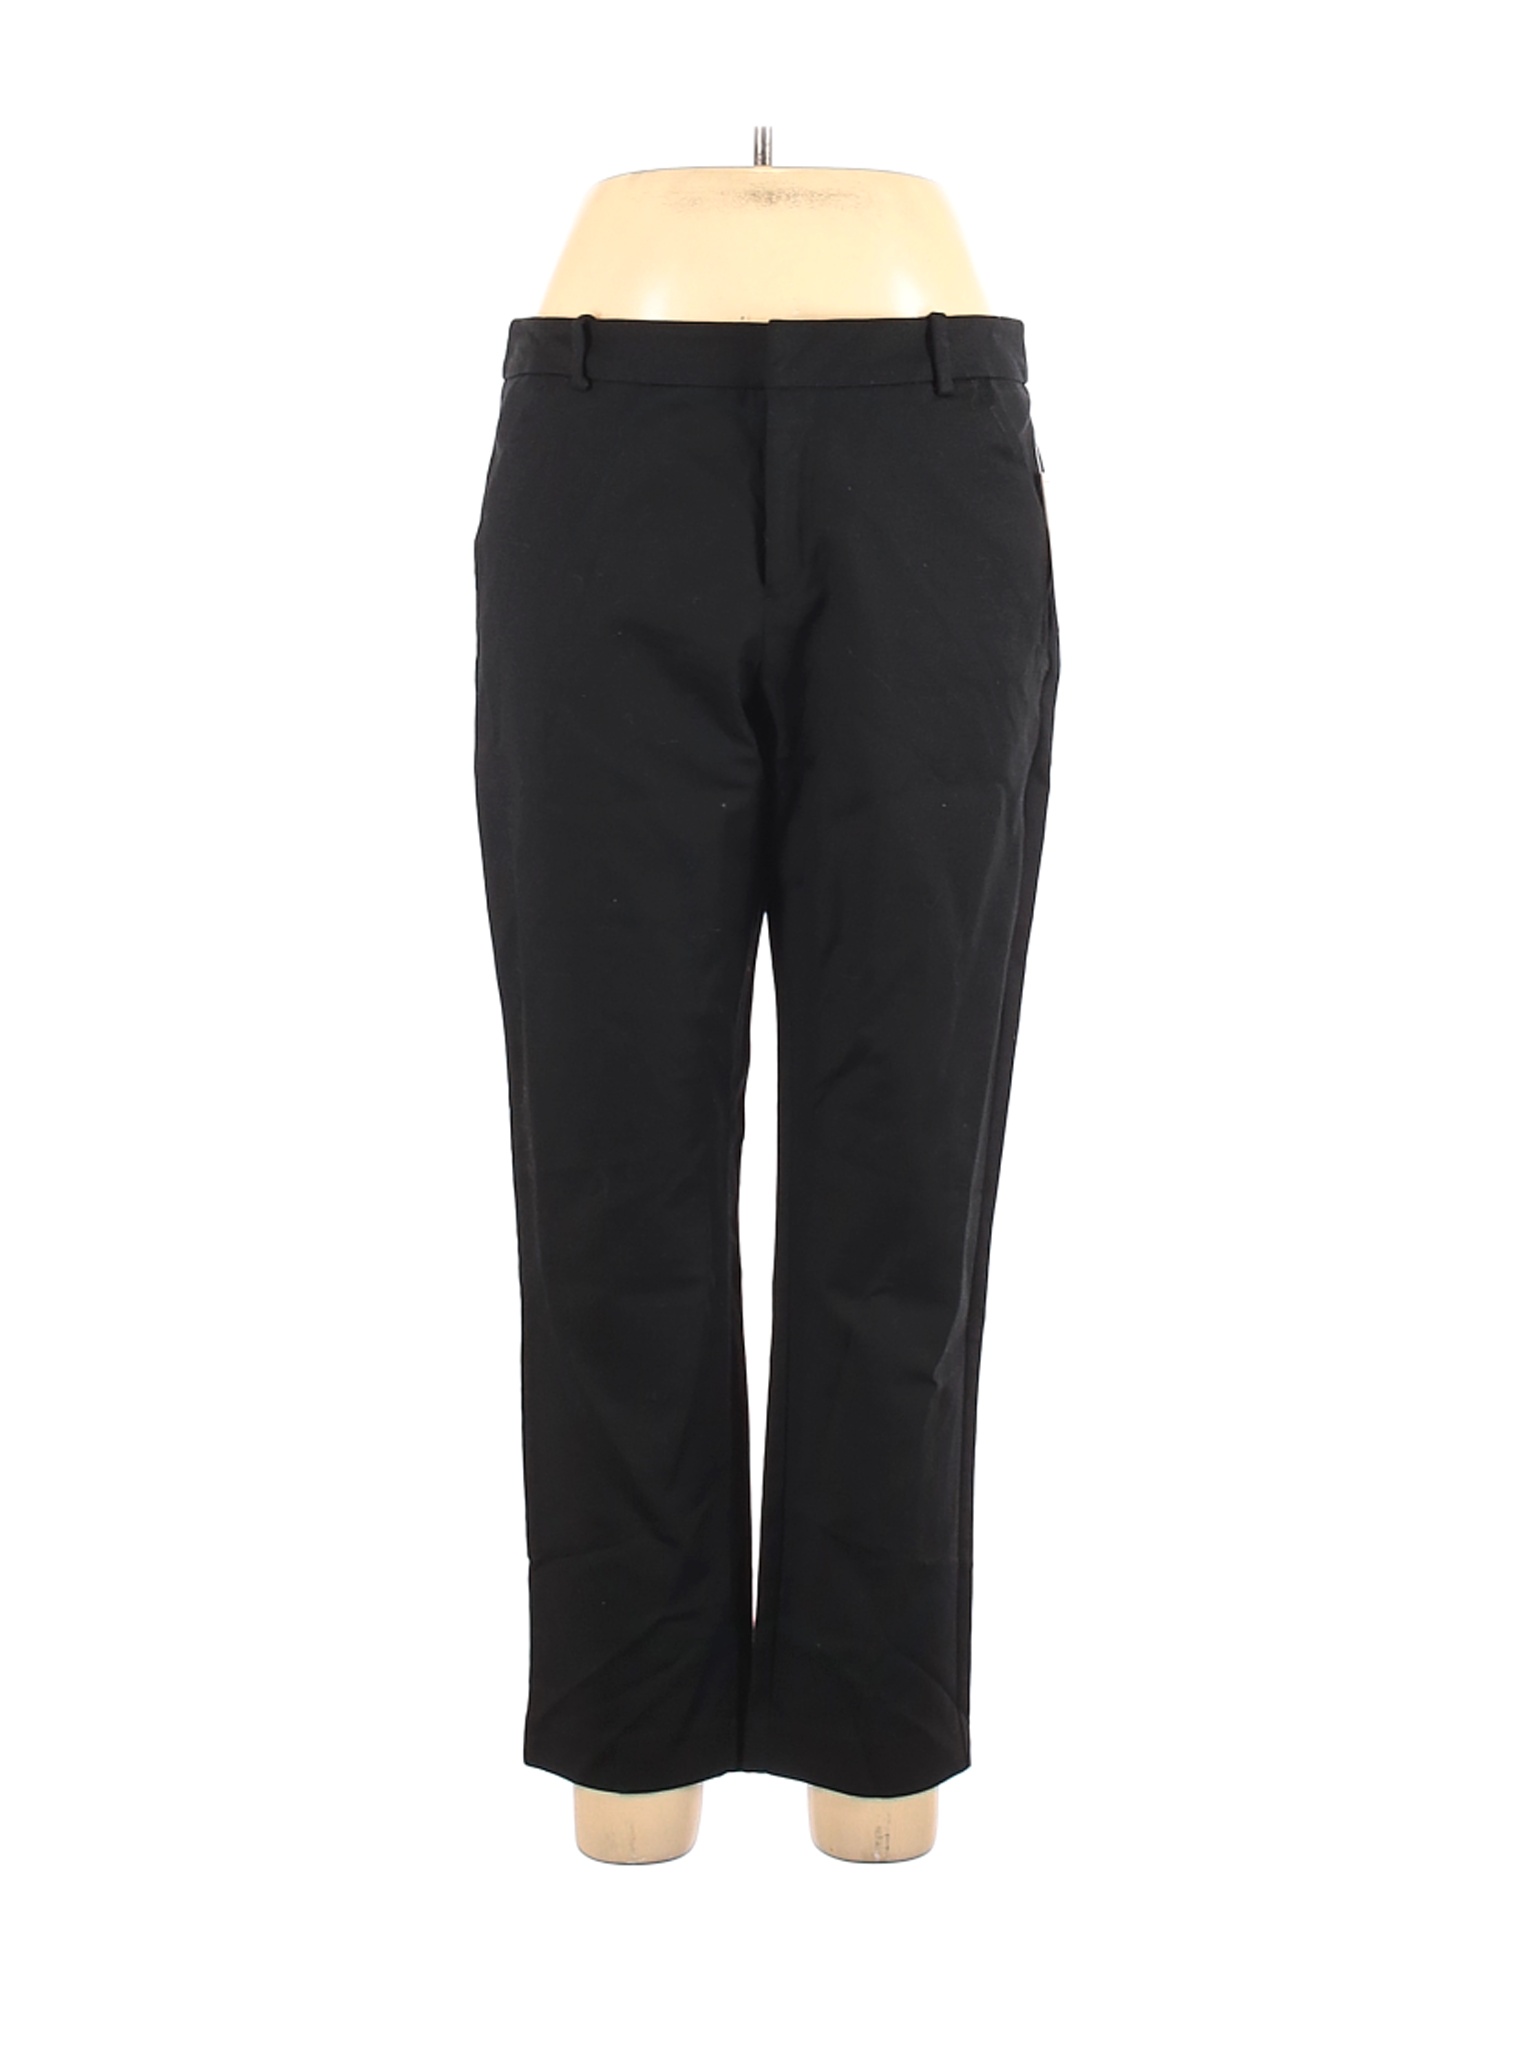 NWT Merona Women Black Dress Pants 14 | eBay